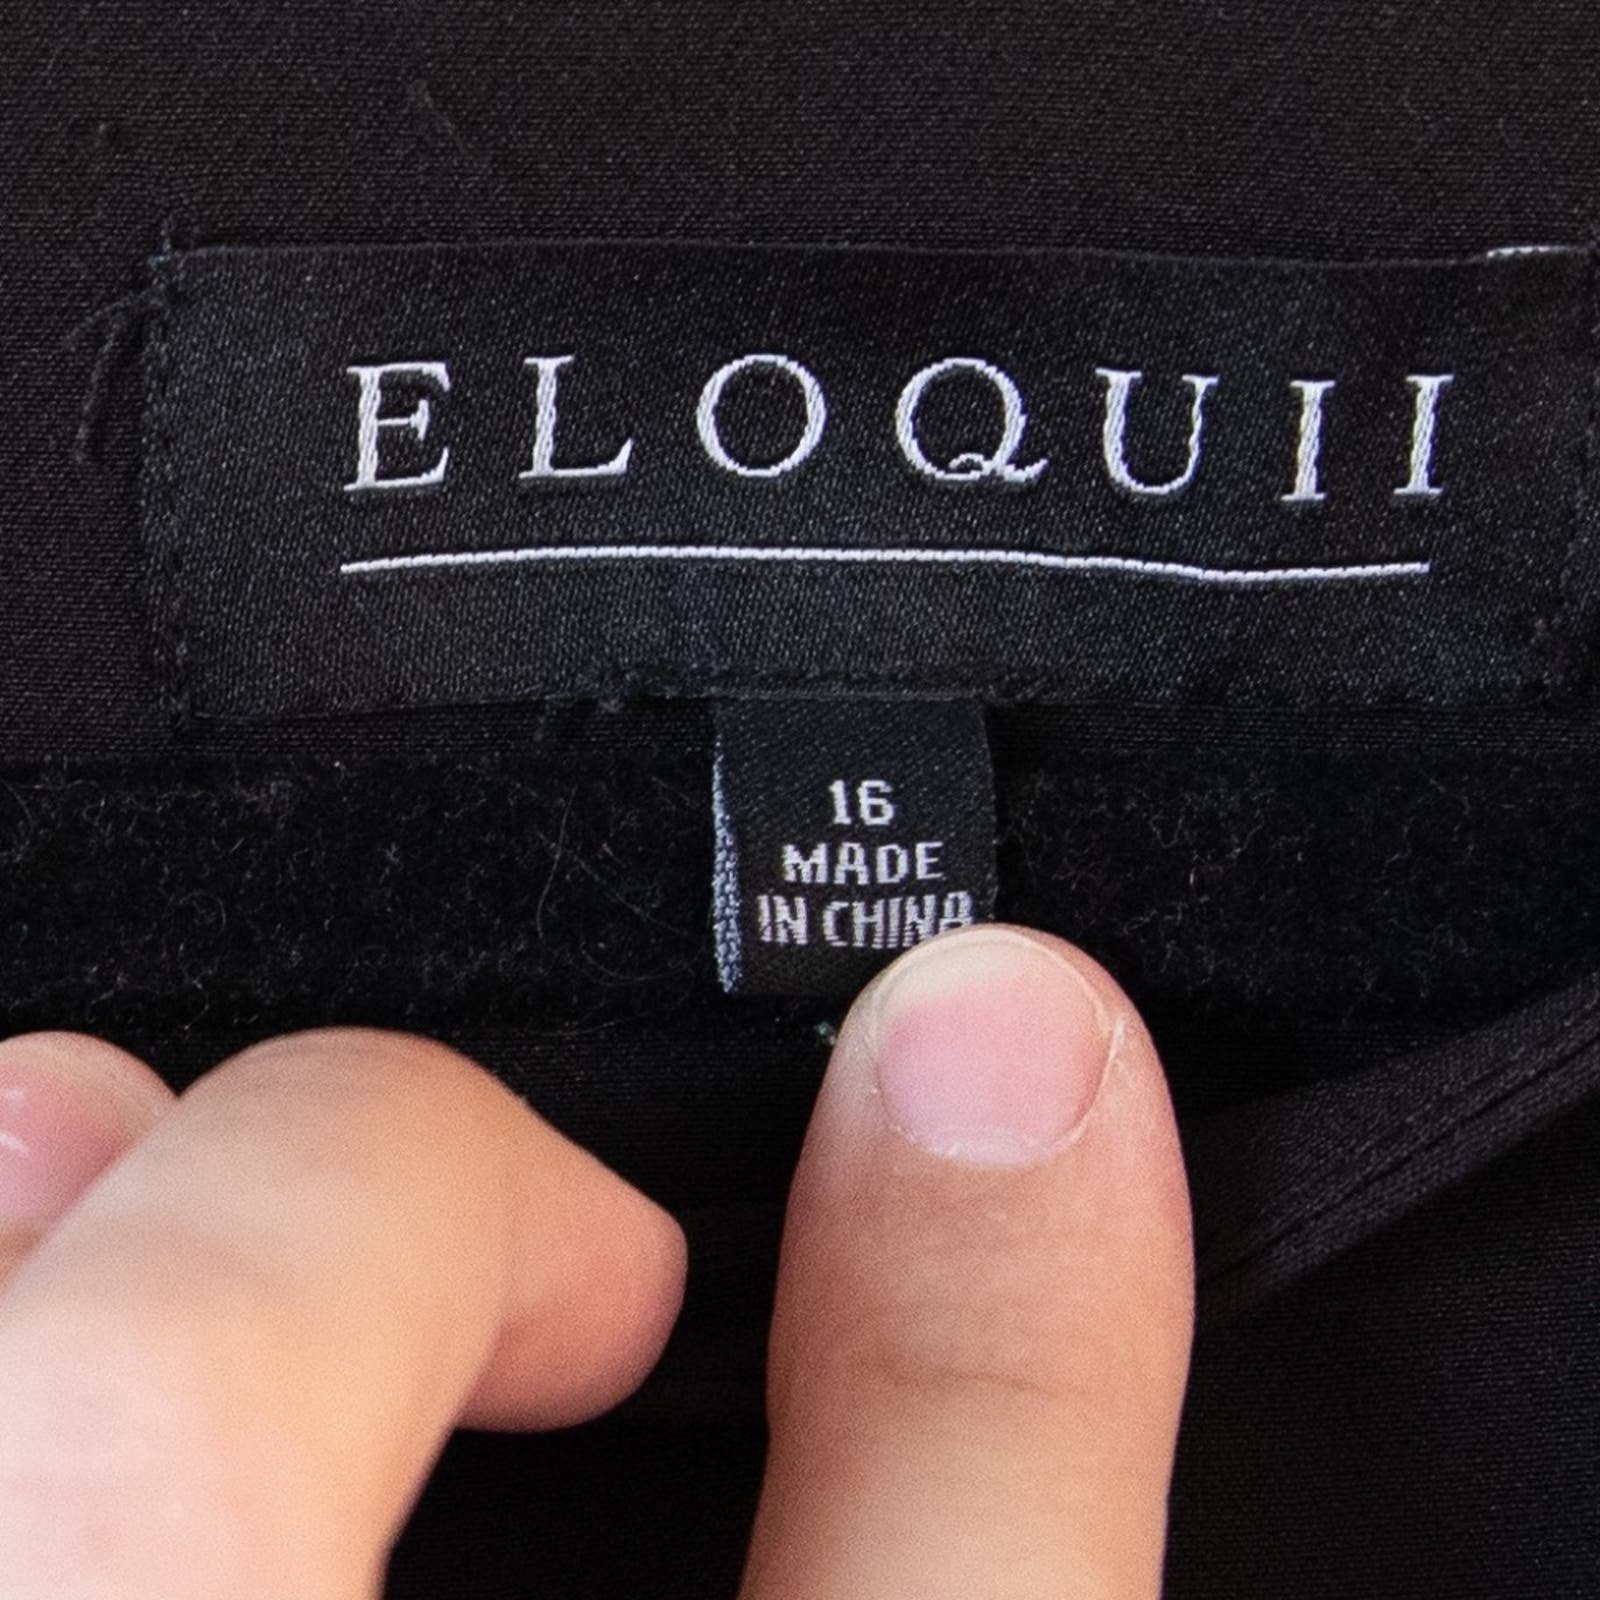 where to buy  Eloquii Black Cape Dress oJy1gK7ub Store Online